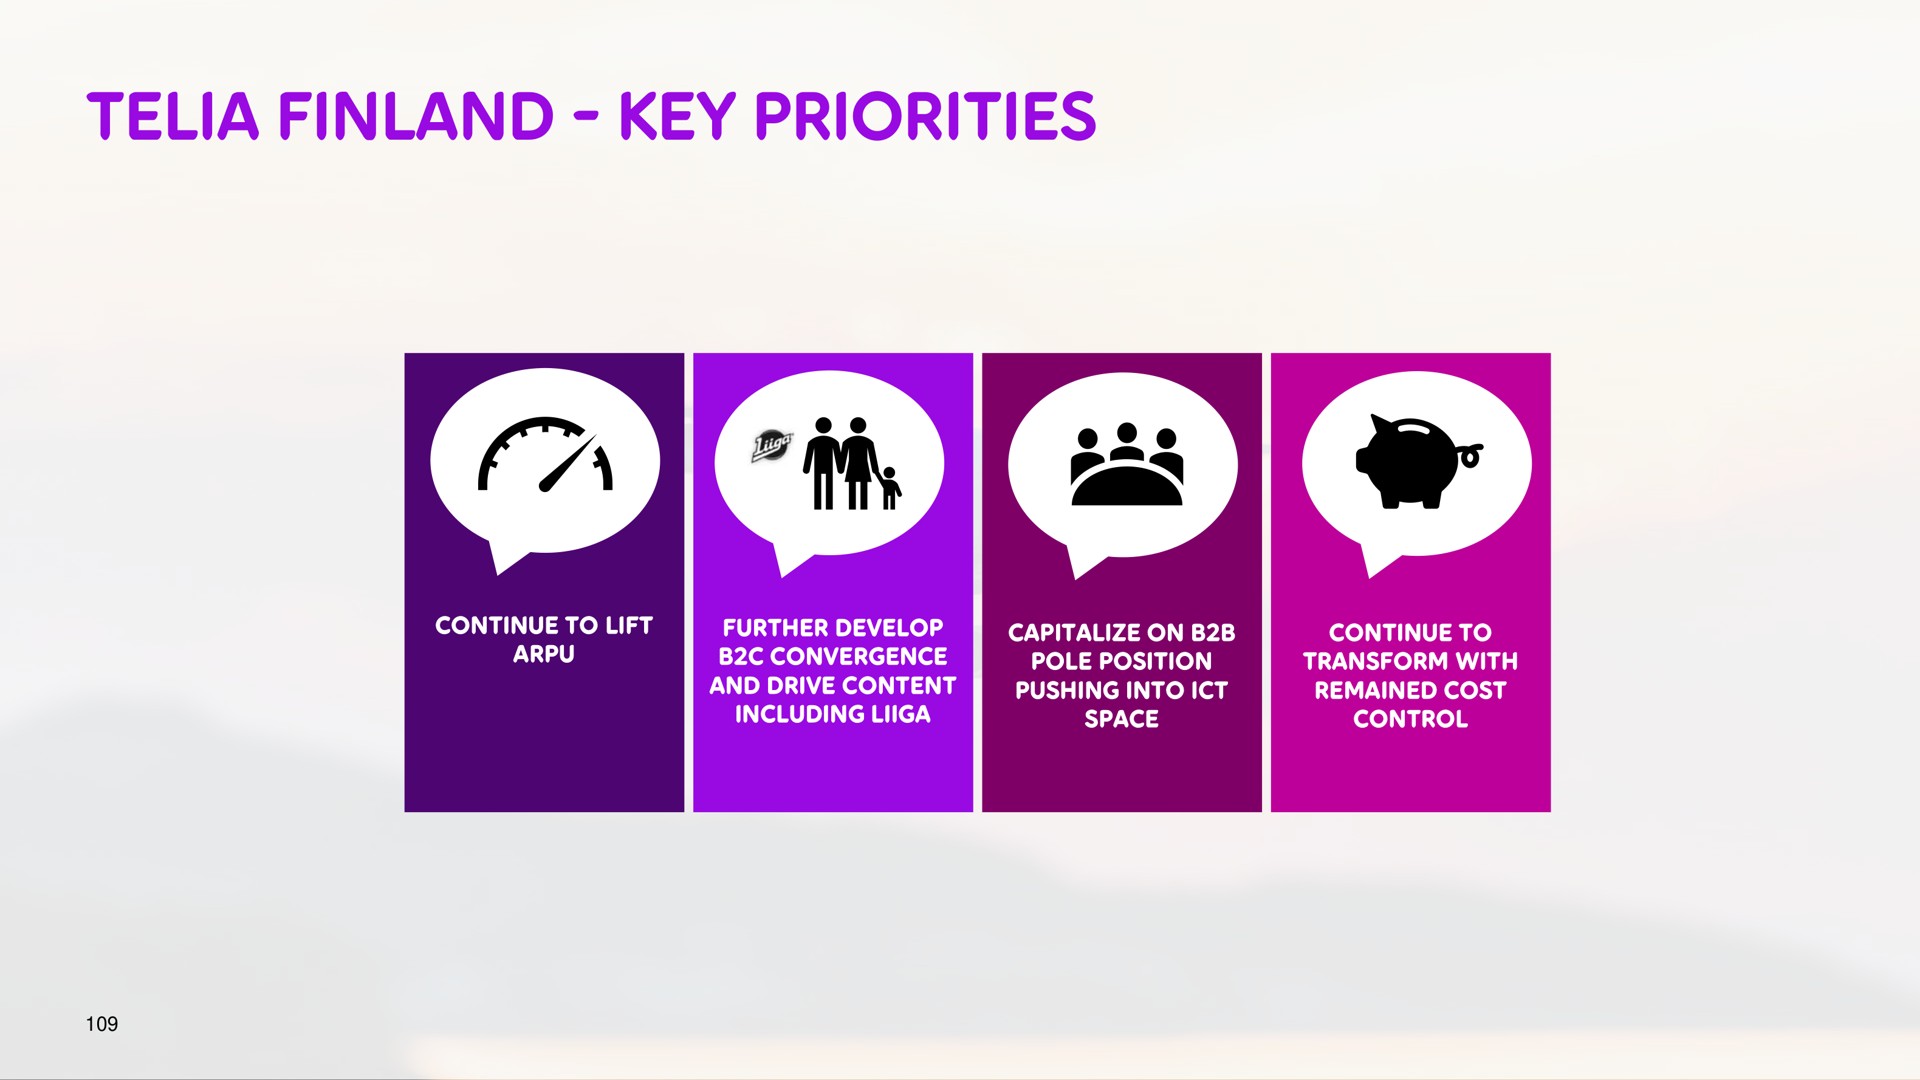 finland key priorities | Telia Company